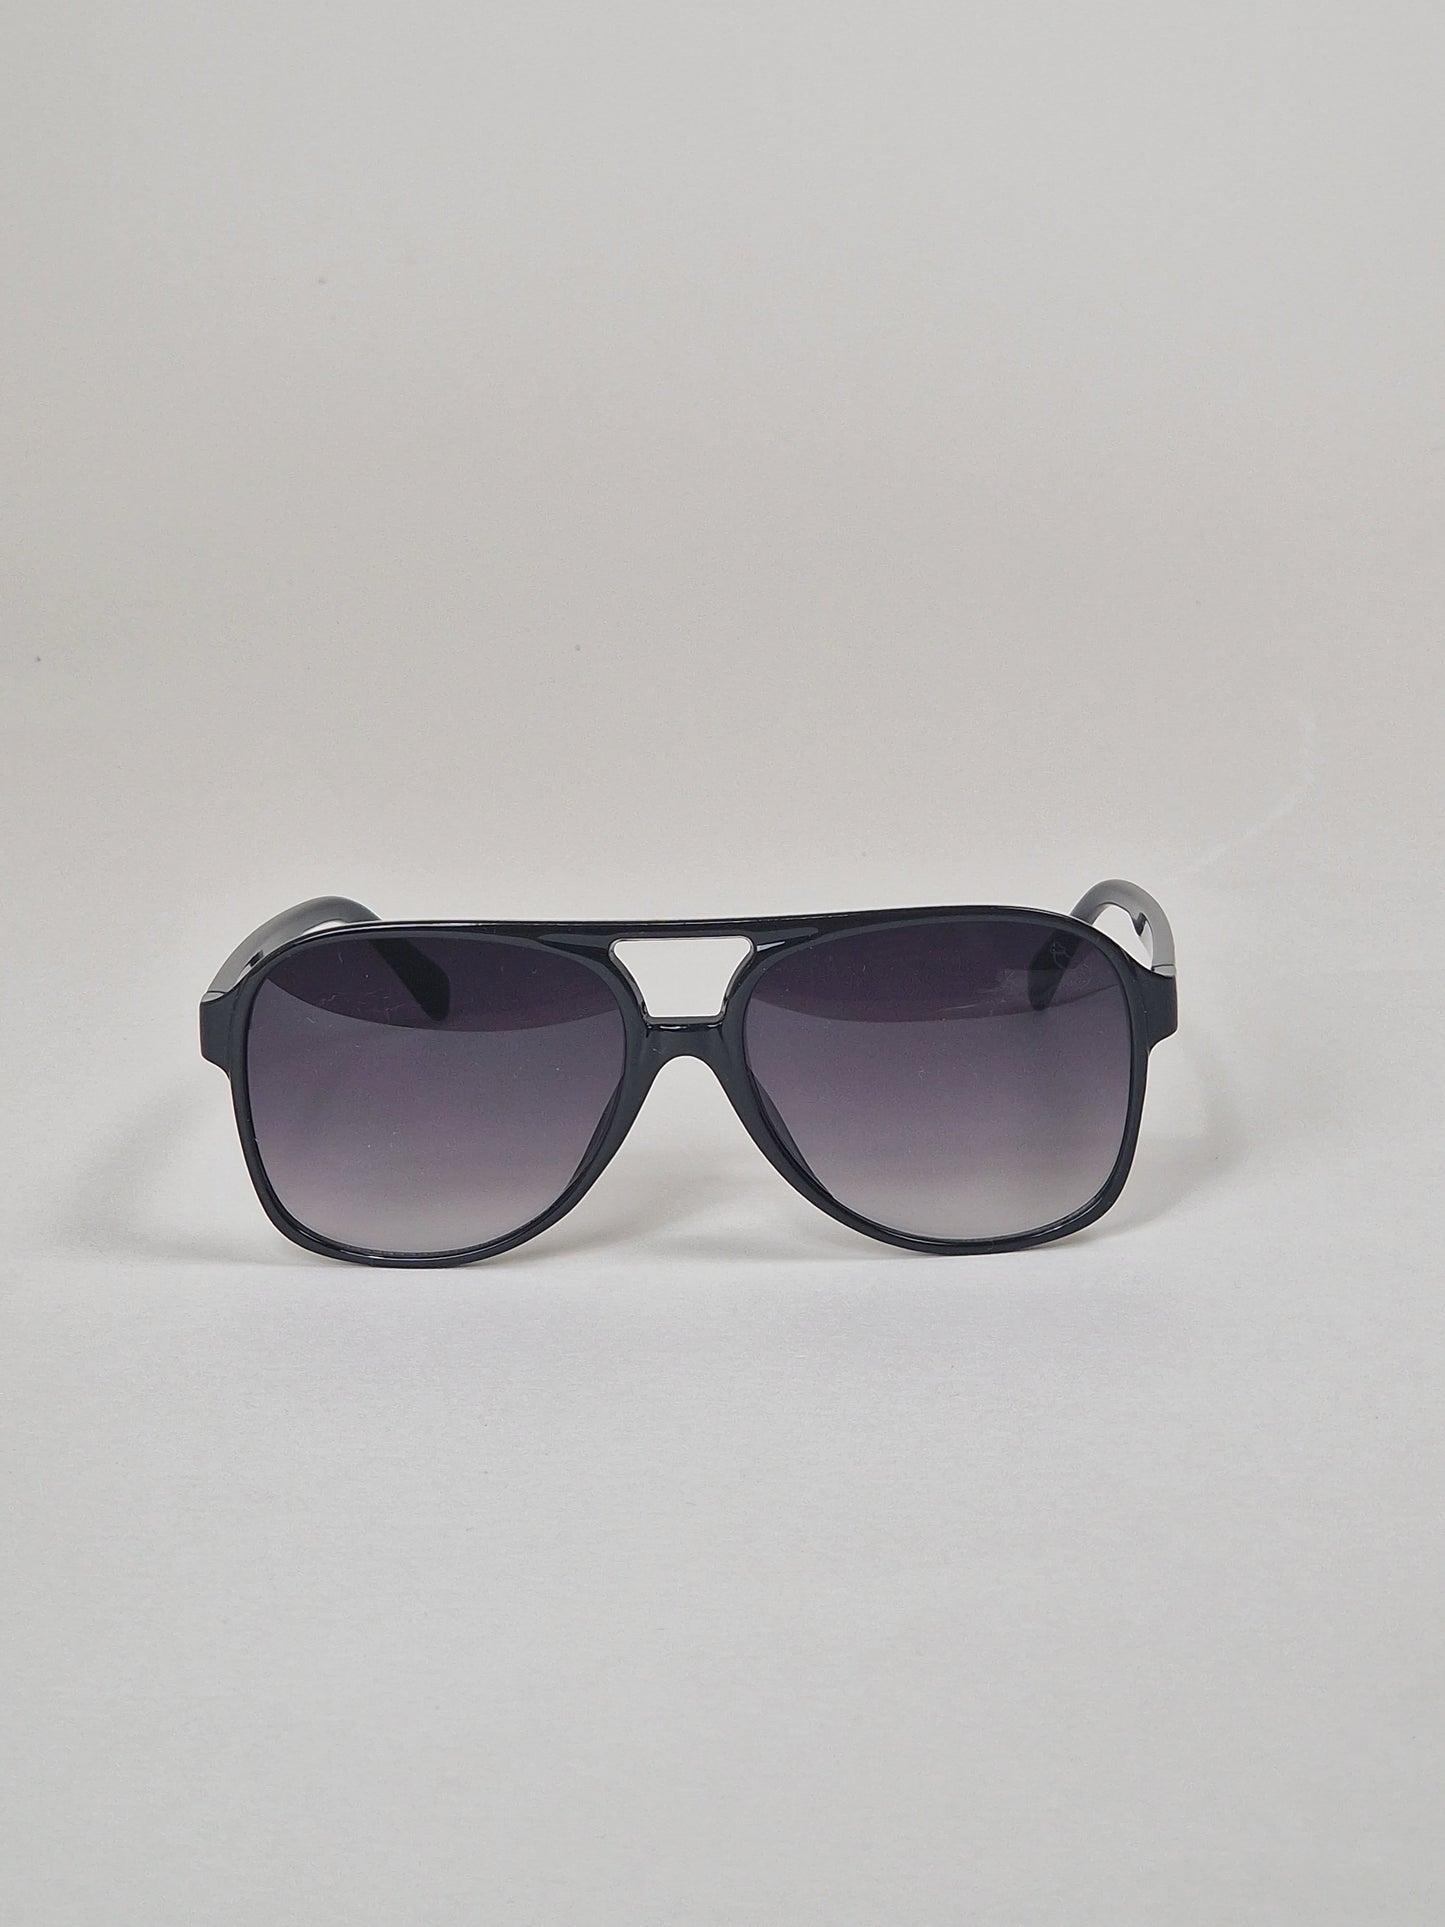 Sunglasses, model 45 - Lilac tinted.